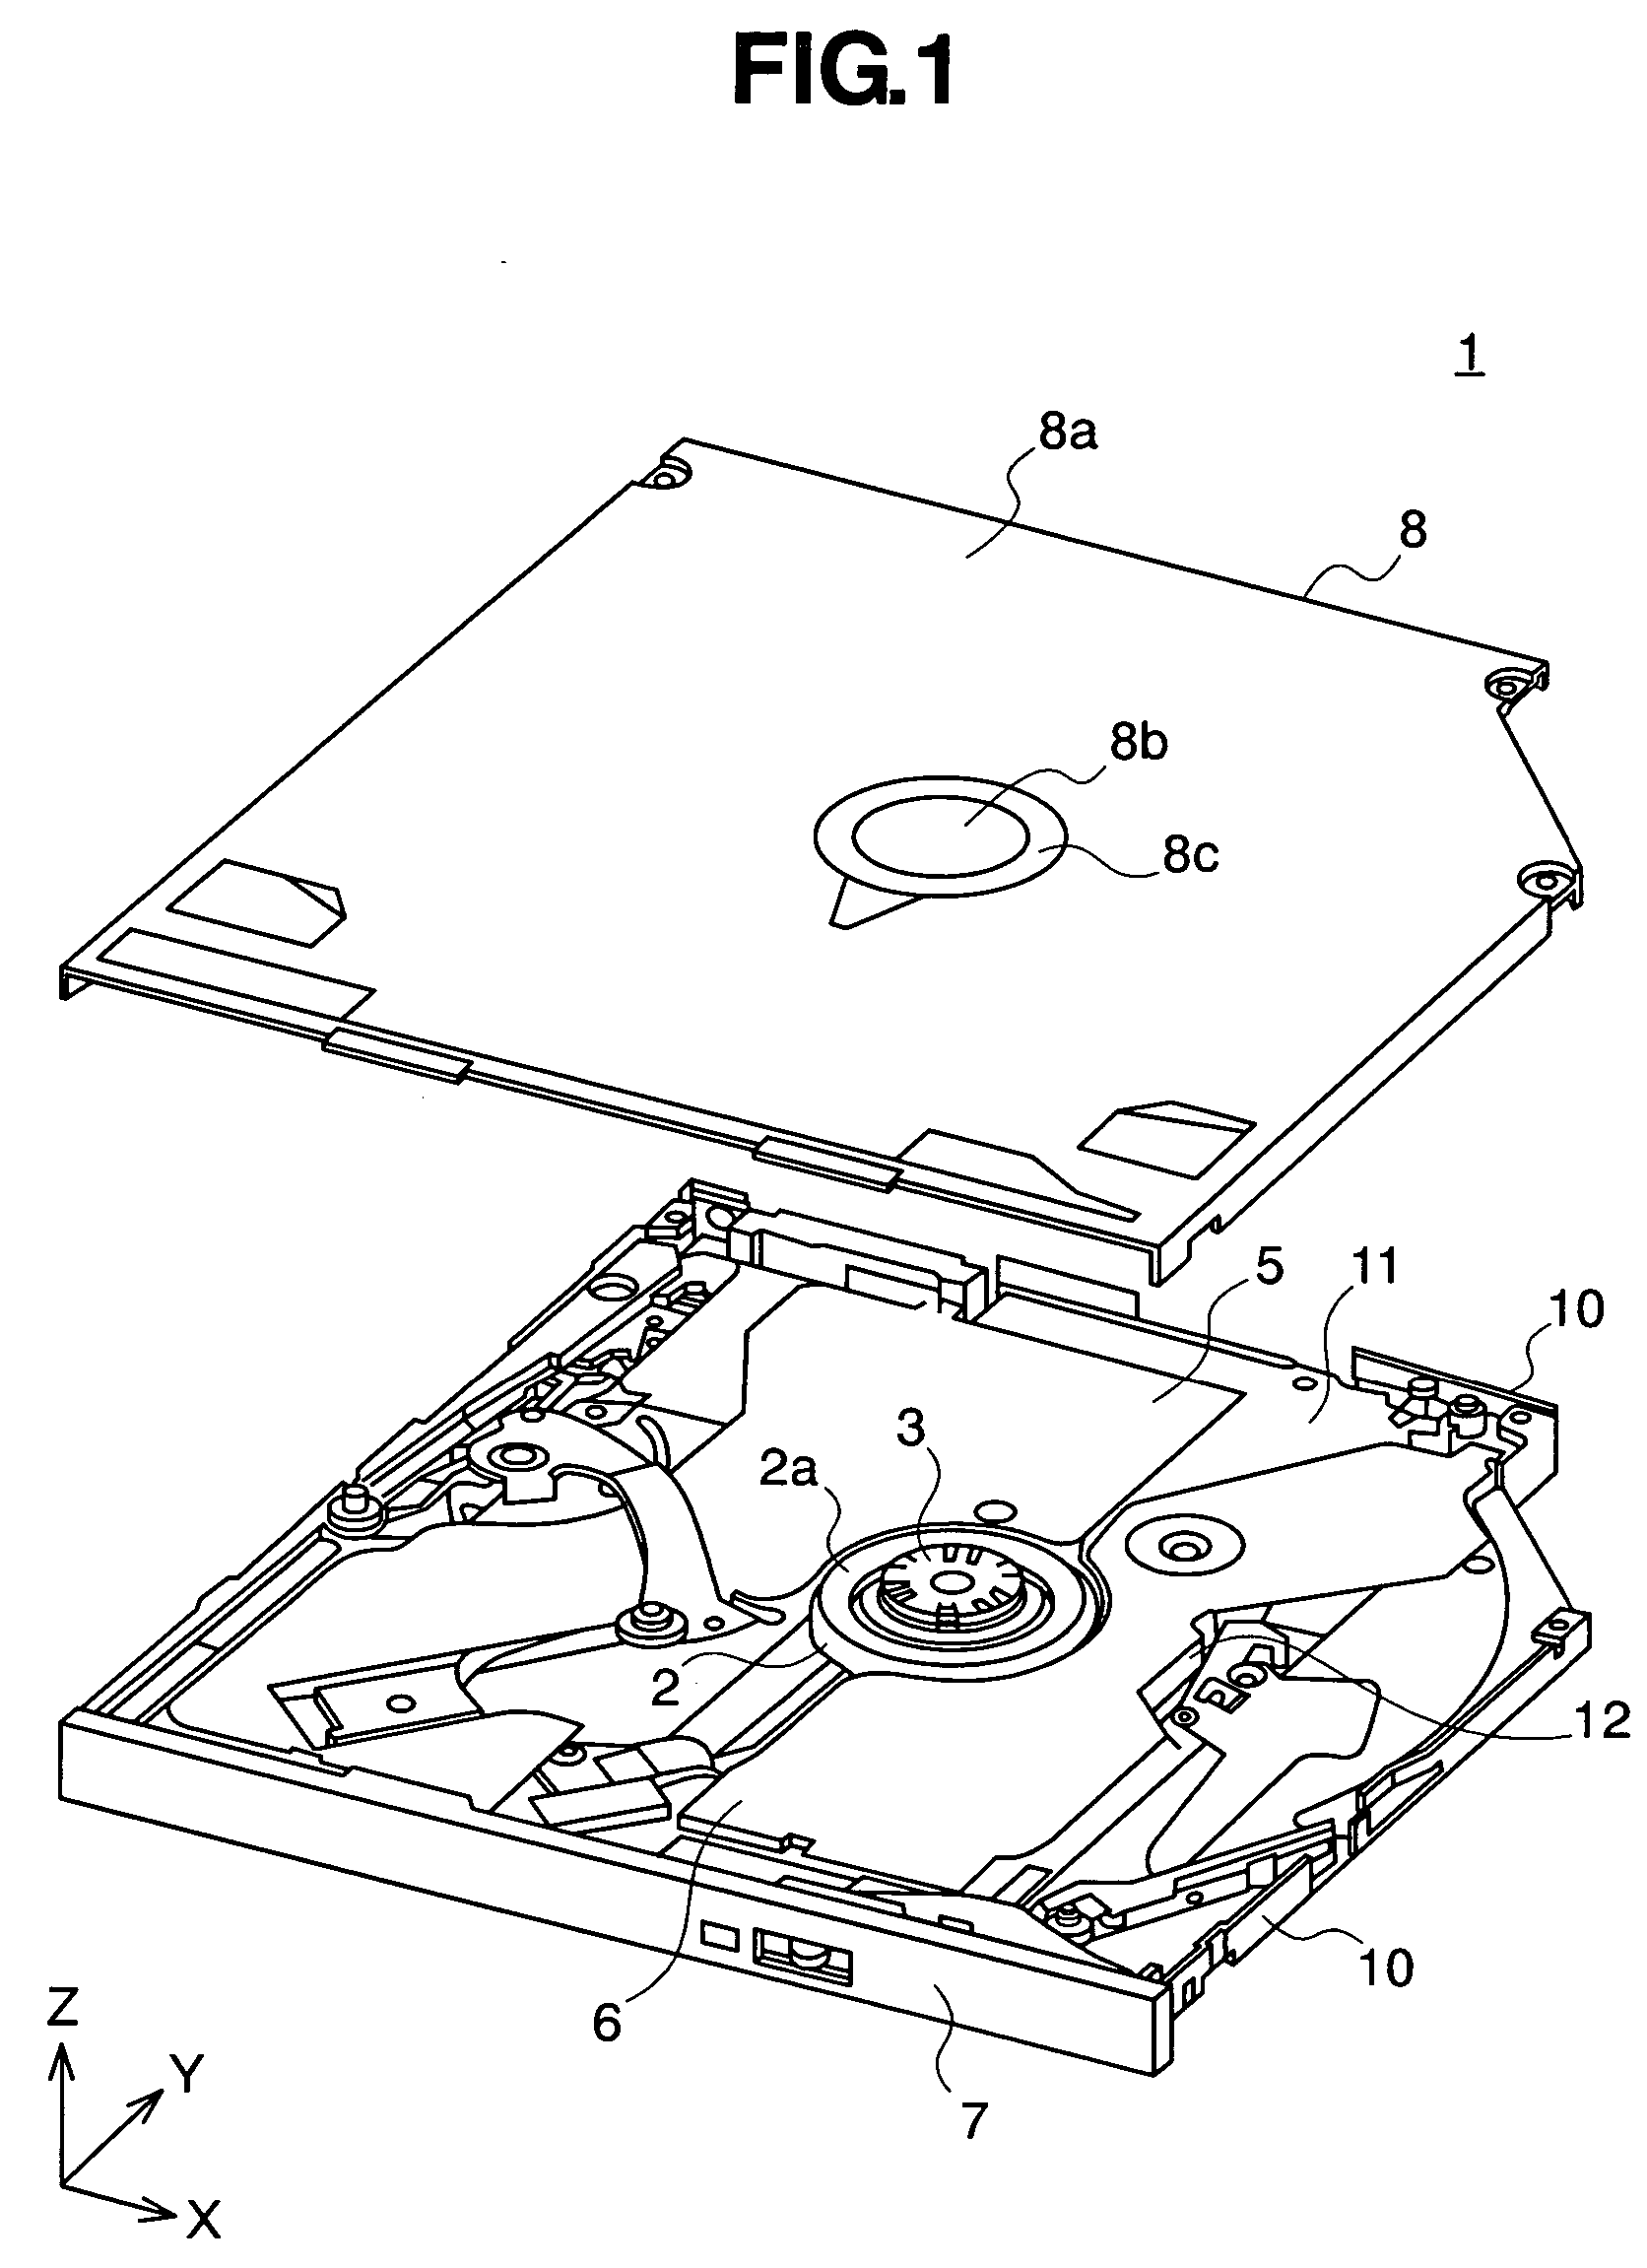 Optical disc apparatus